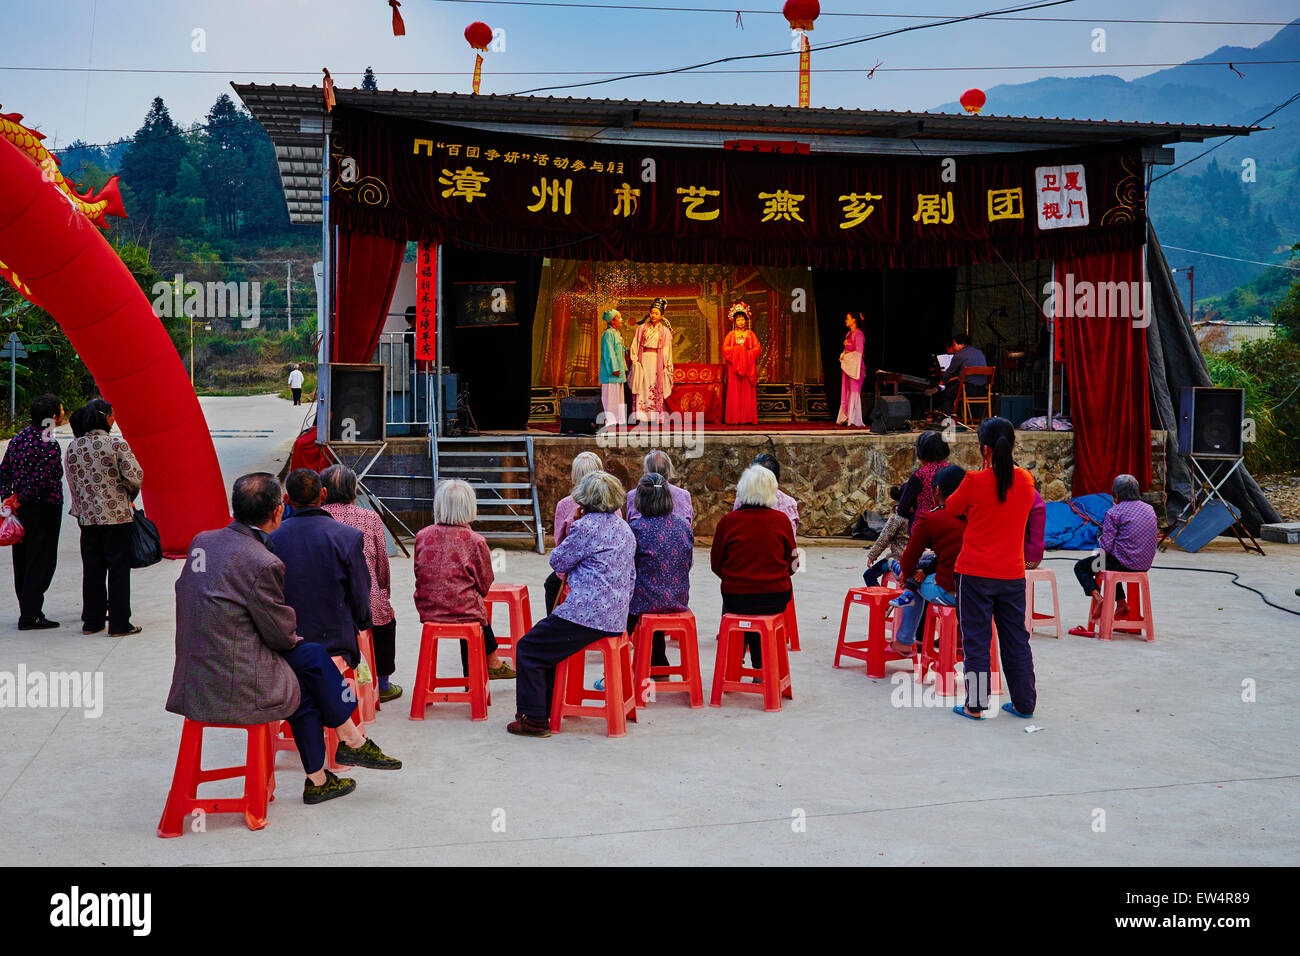 China, Fujian province, Yuchang Lou village, ambulant outdoor theater Stock Photo